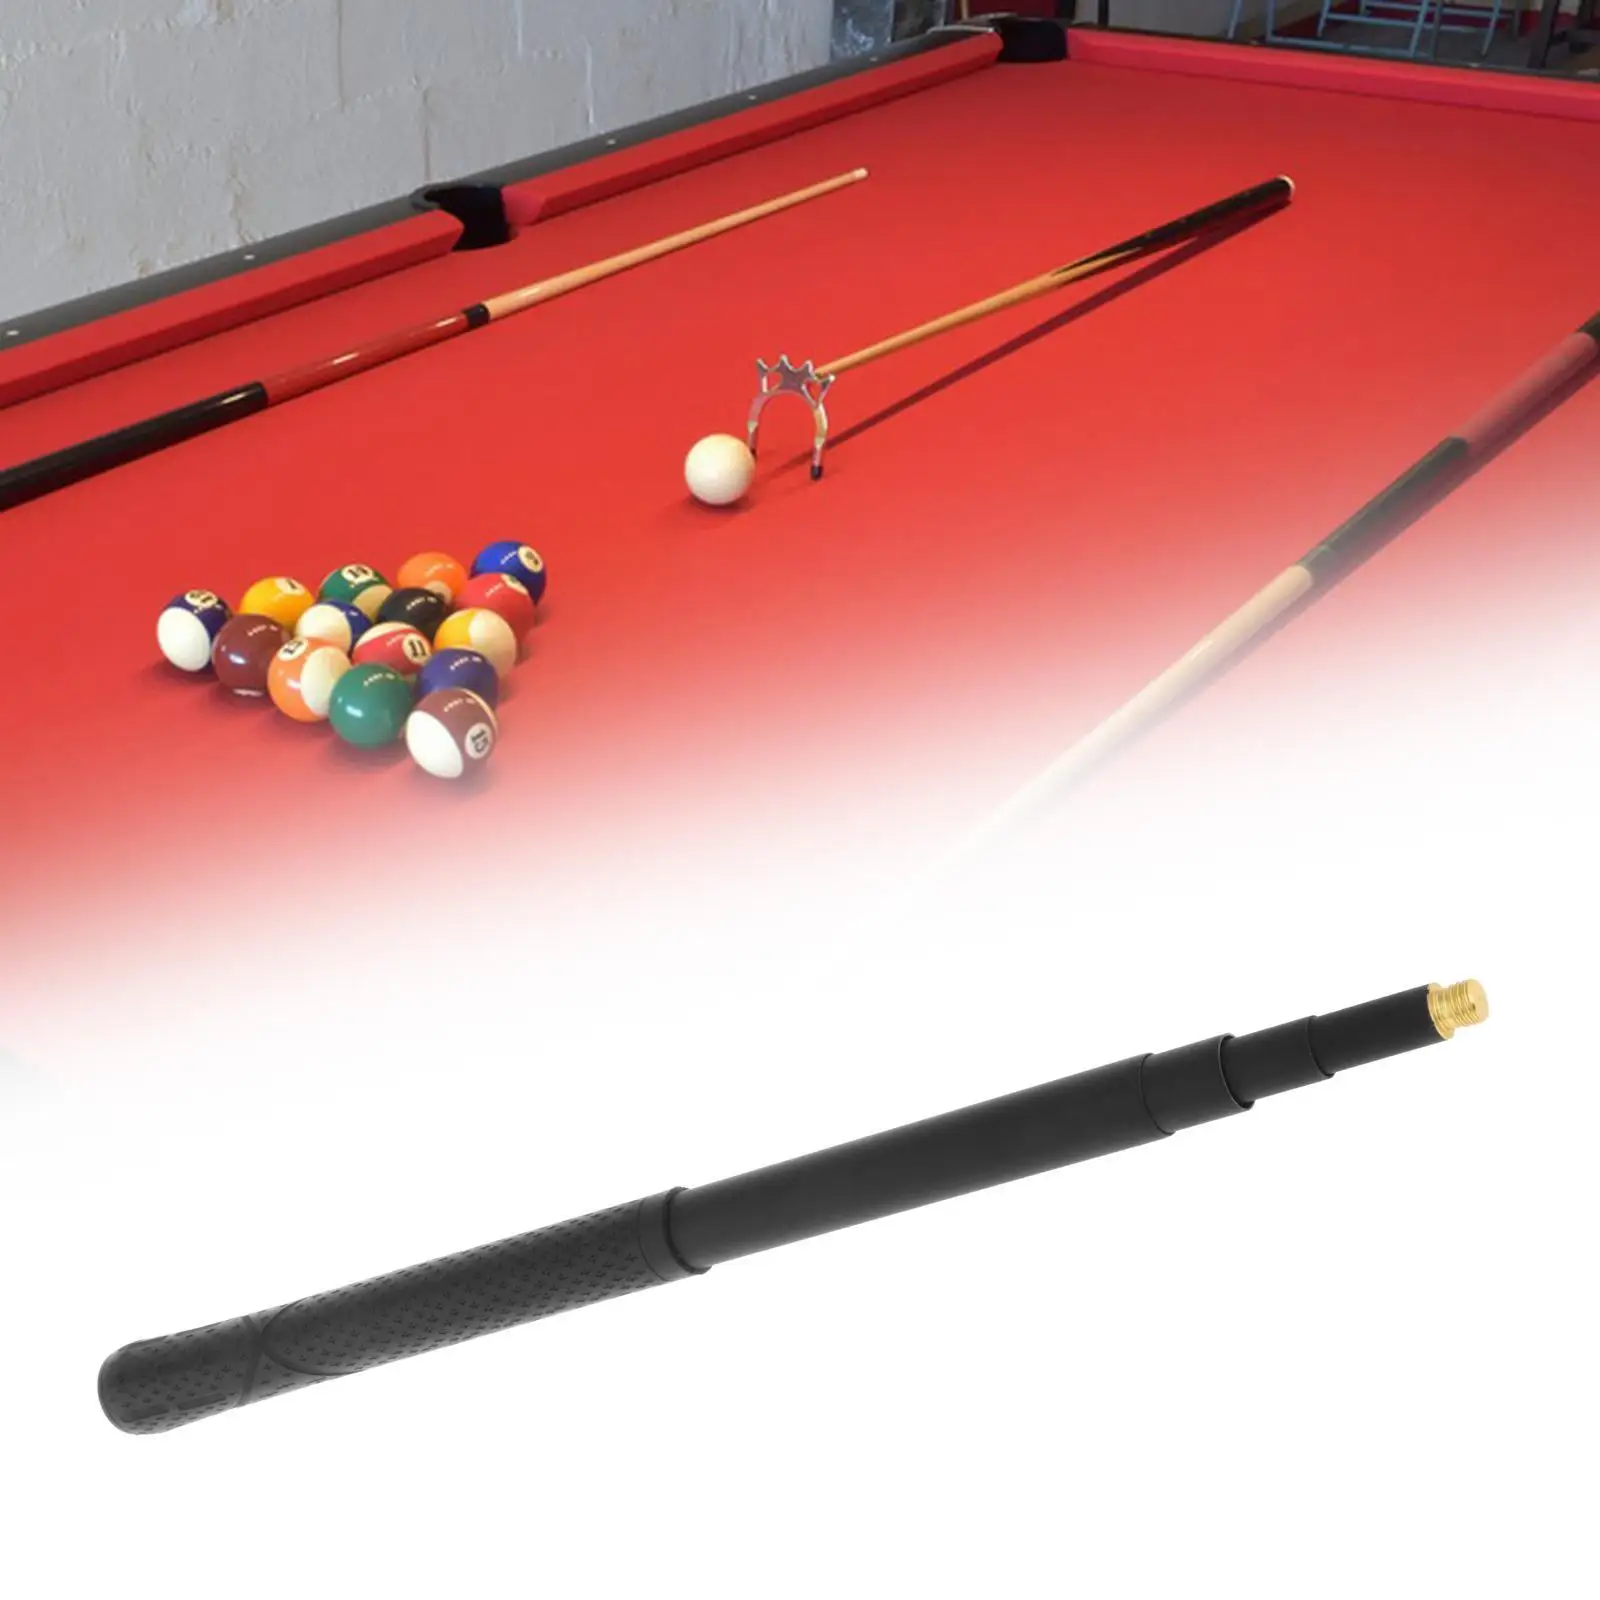 Pool Cue Bridge Sticks Telescopic Auxiliary Cue Pool Cue Sticks Billiards Cue Sticks for Pool Table Snooker Practice Accessory